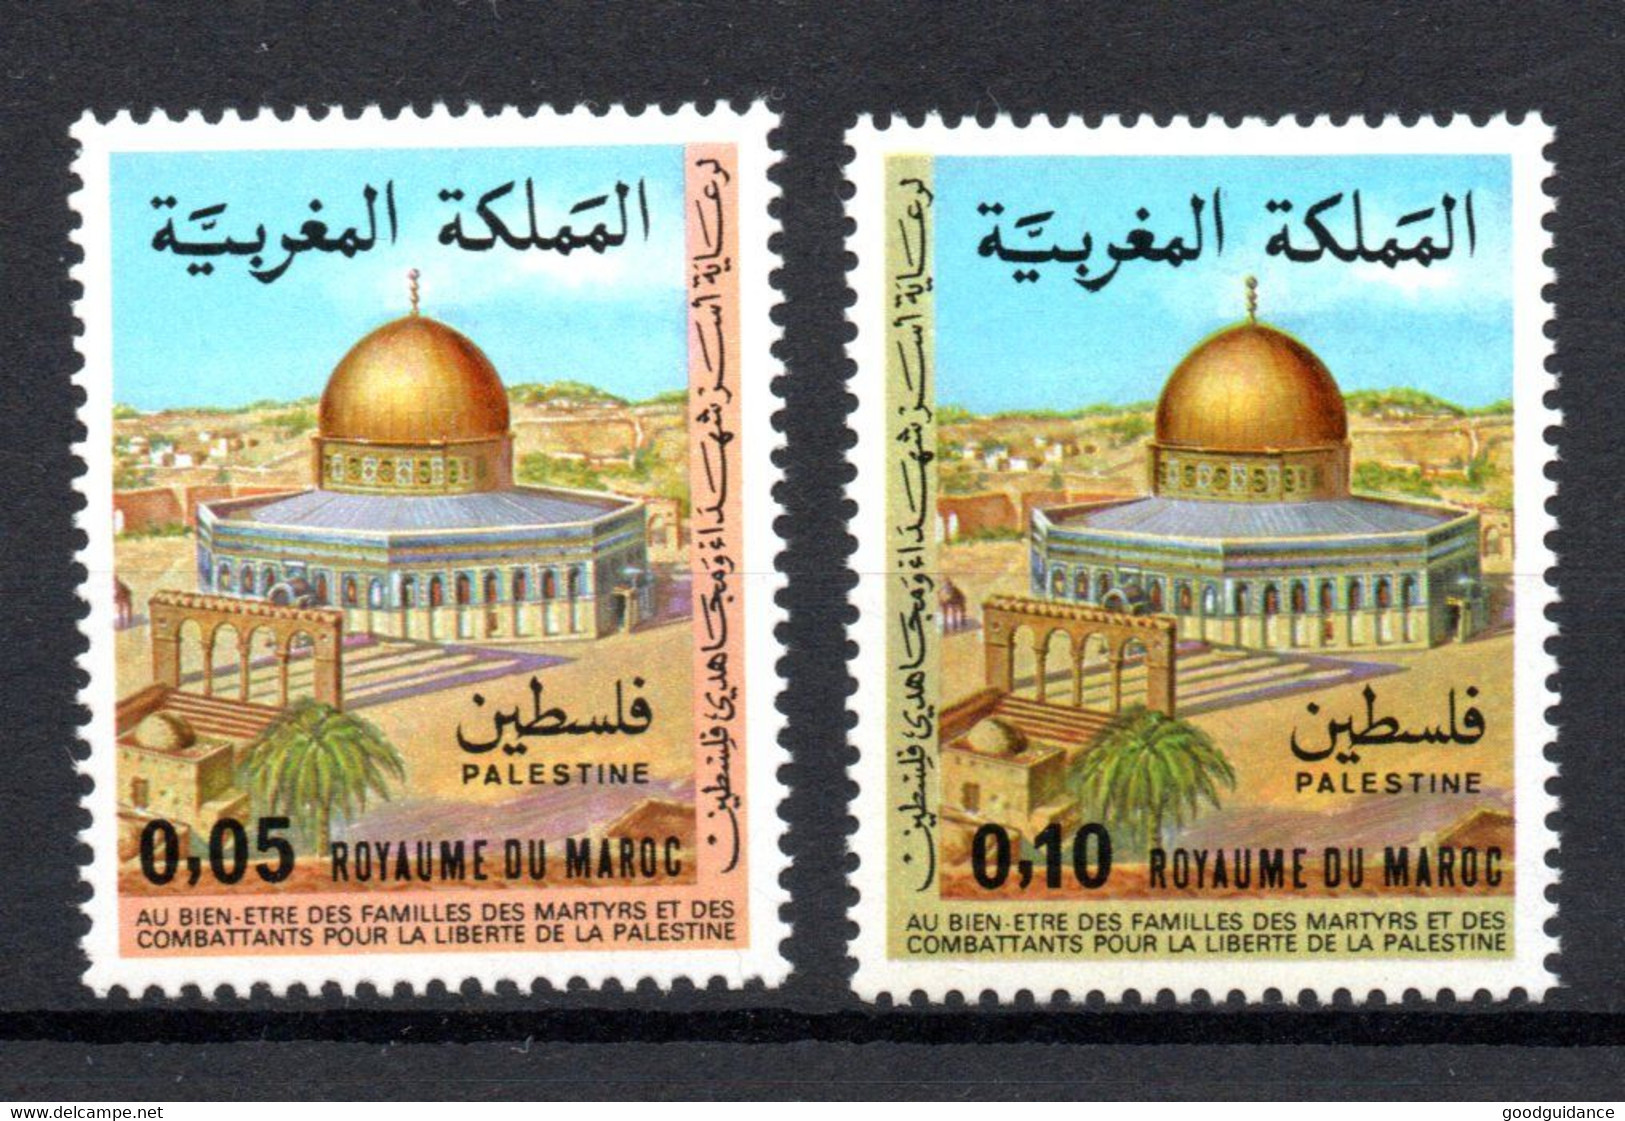 1978 - Morocco- Maroc- Palestinian  Solidarity- Soutien Aux Palestiniens- Dome- Jerusalem- El Quds-  Set 2v.MNH** - Moscheen Und Synagogen